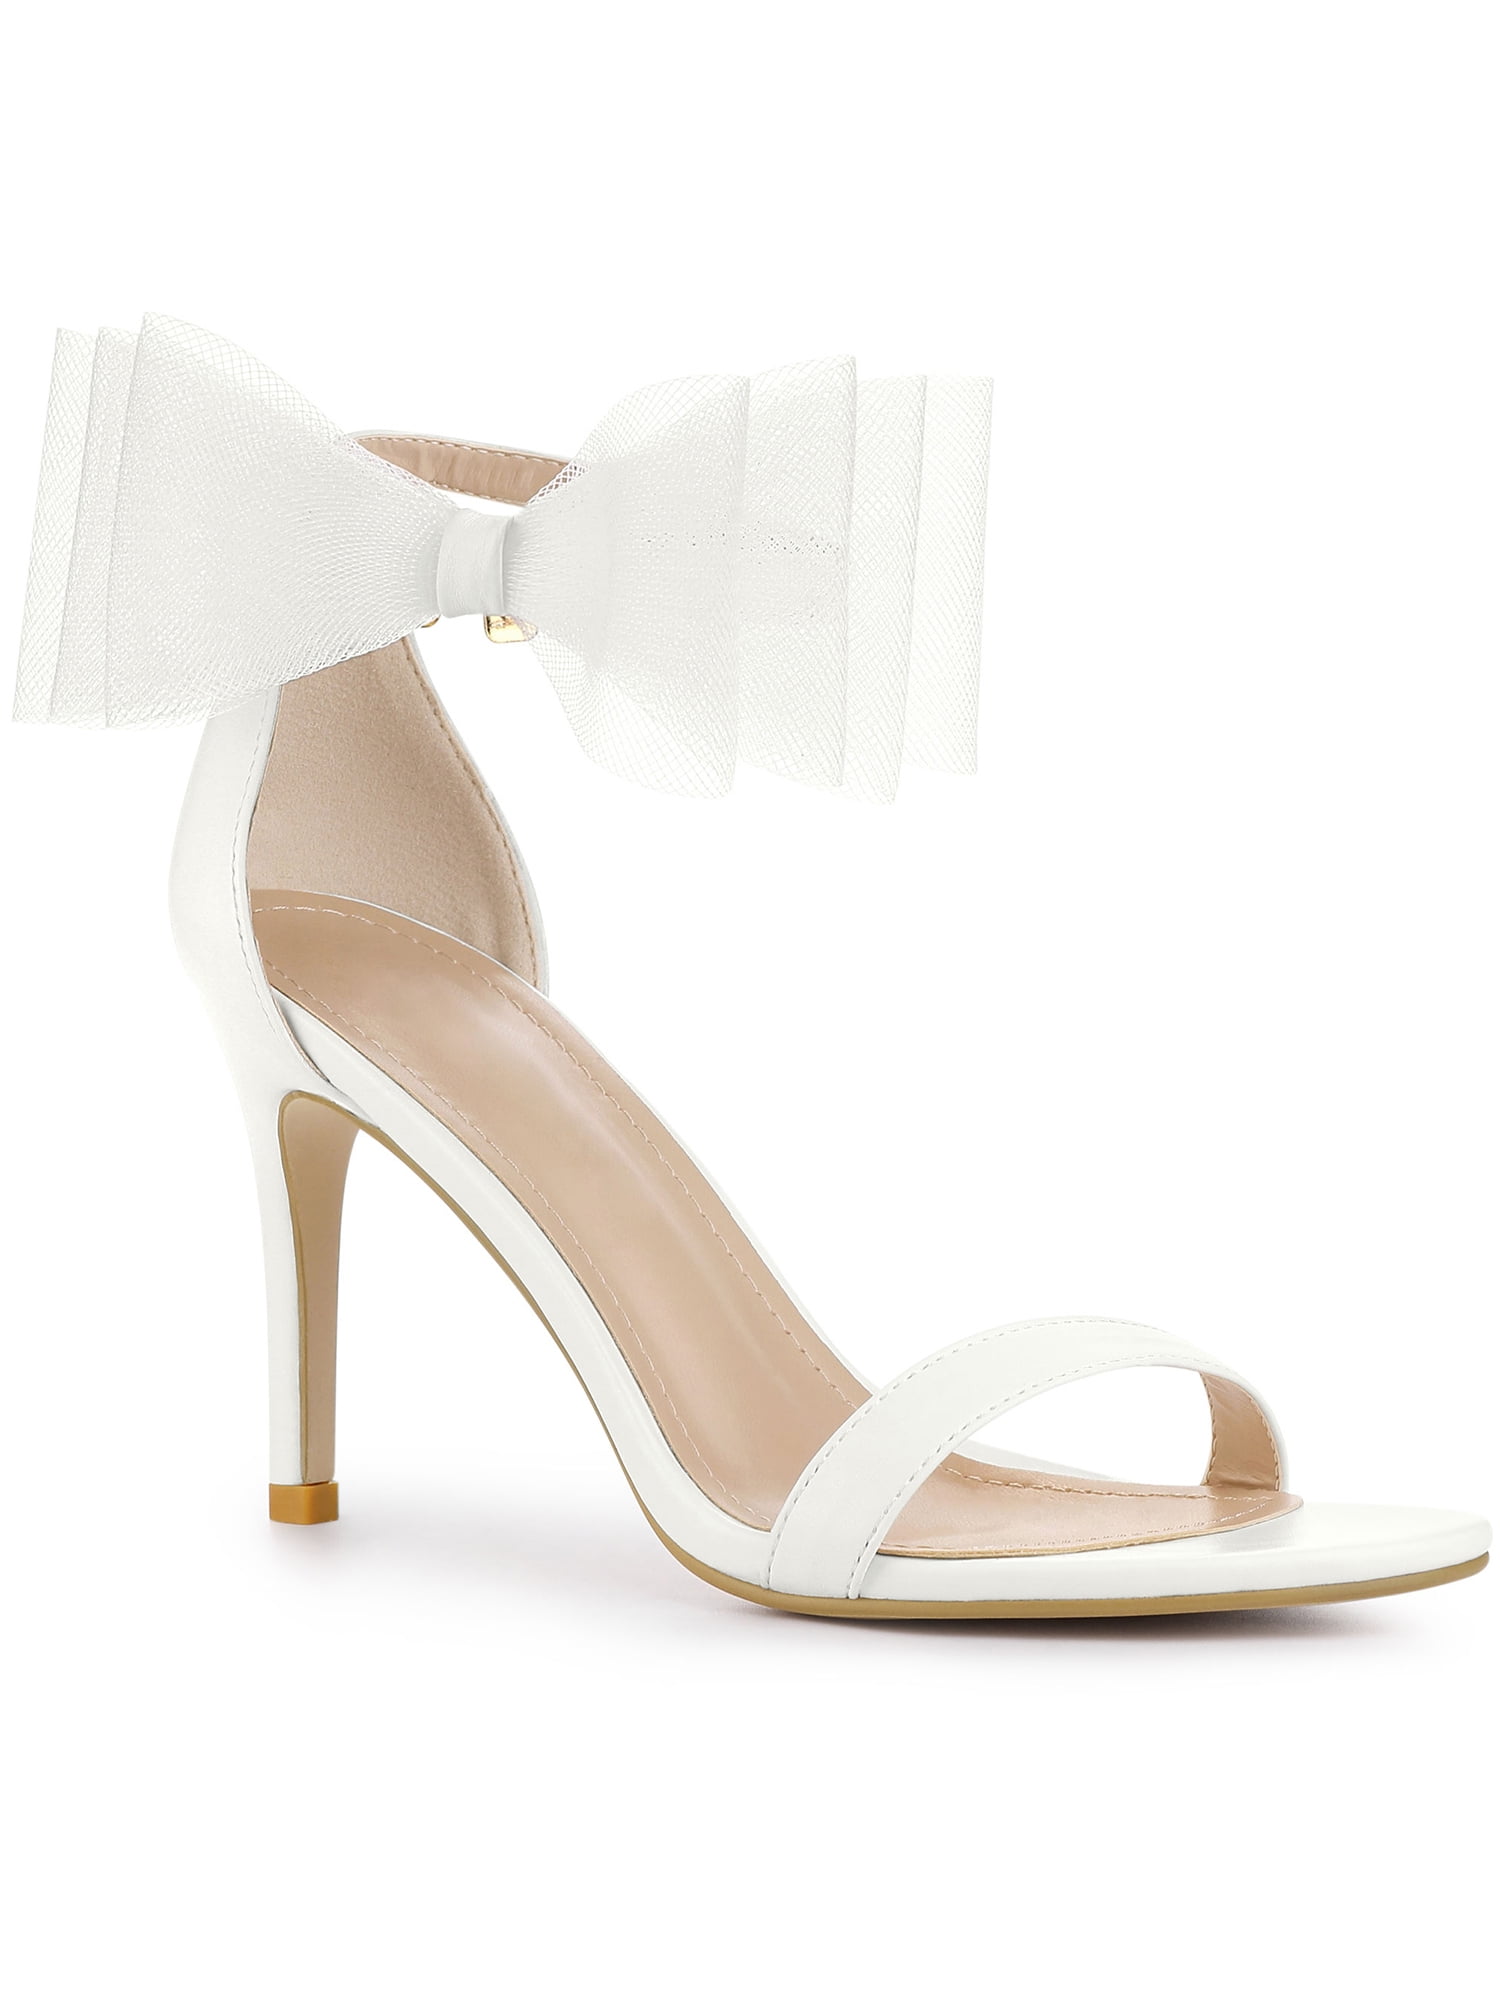 Women Open Toe High Heel Stiletto Platform Wedding Sandals Bowtie Shoes new size 